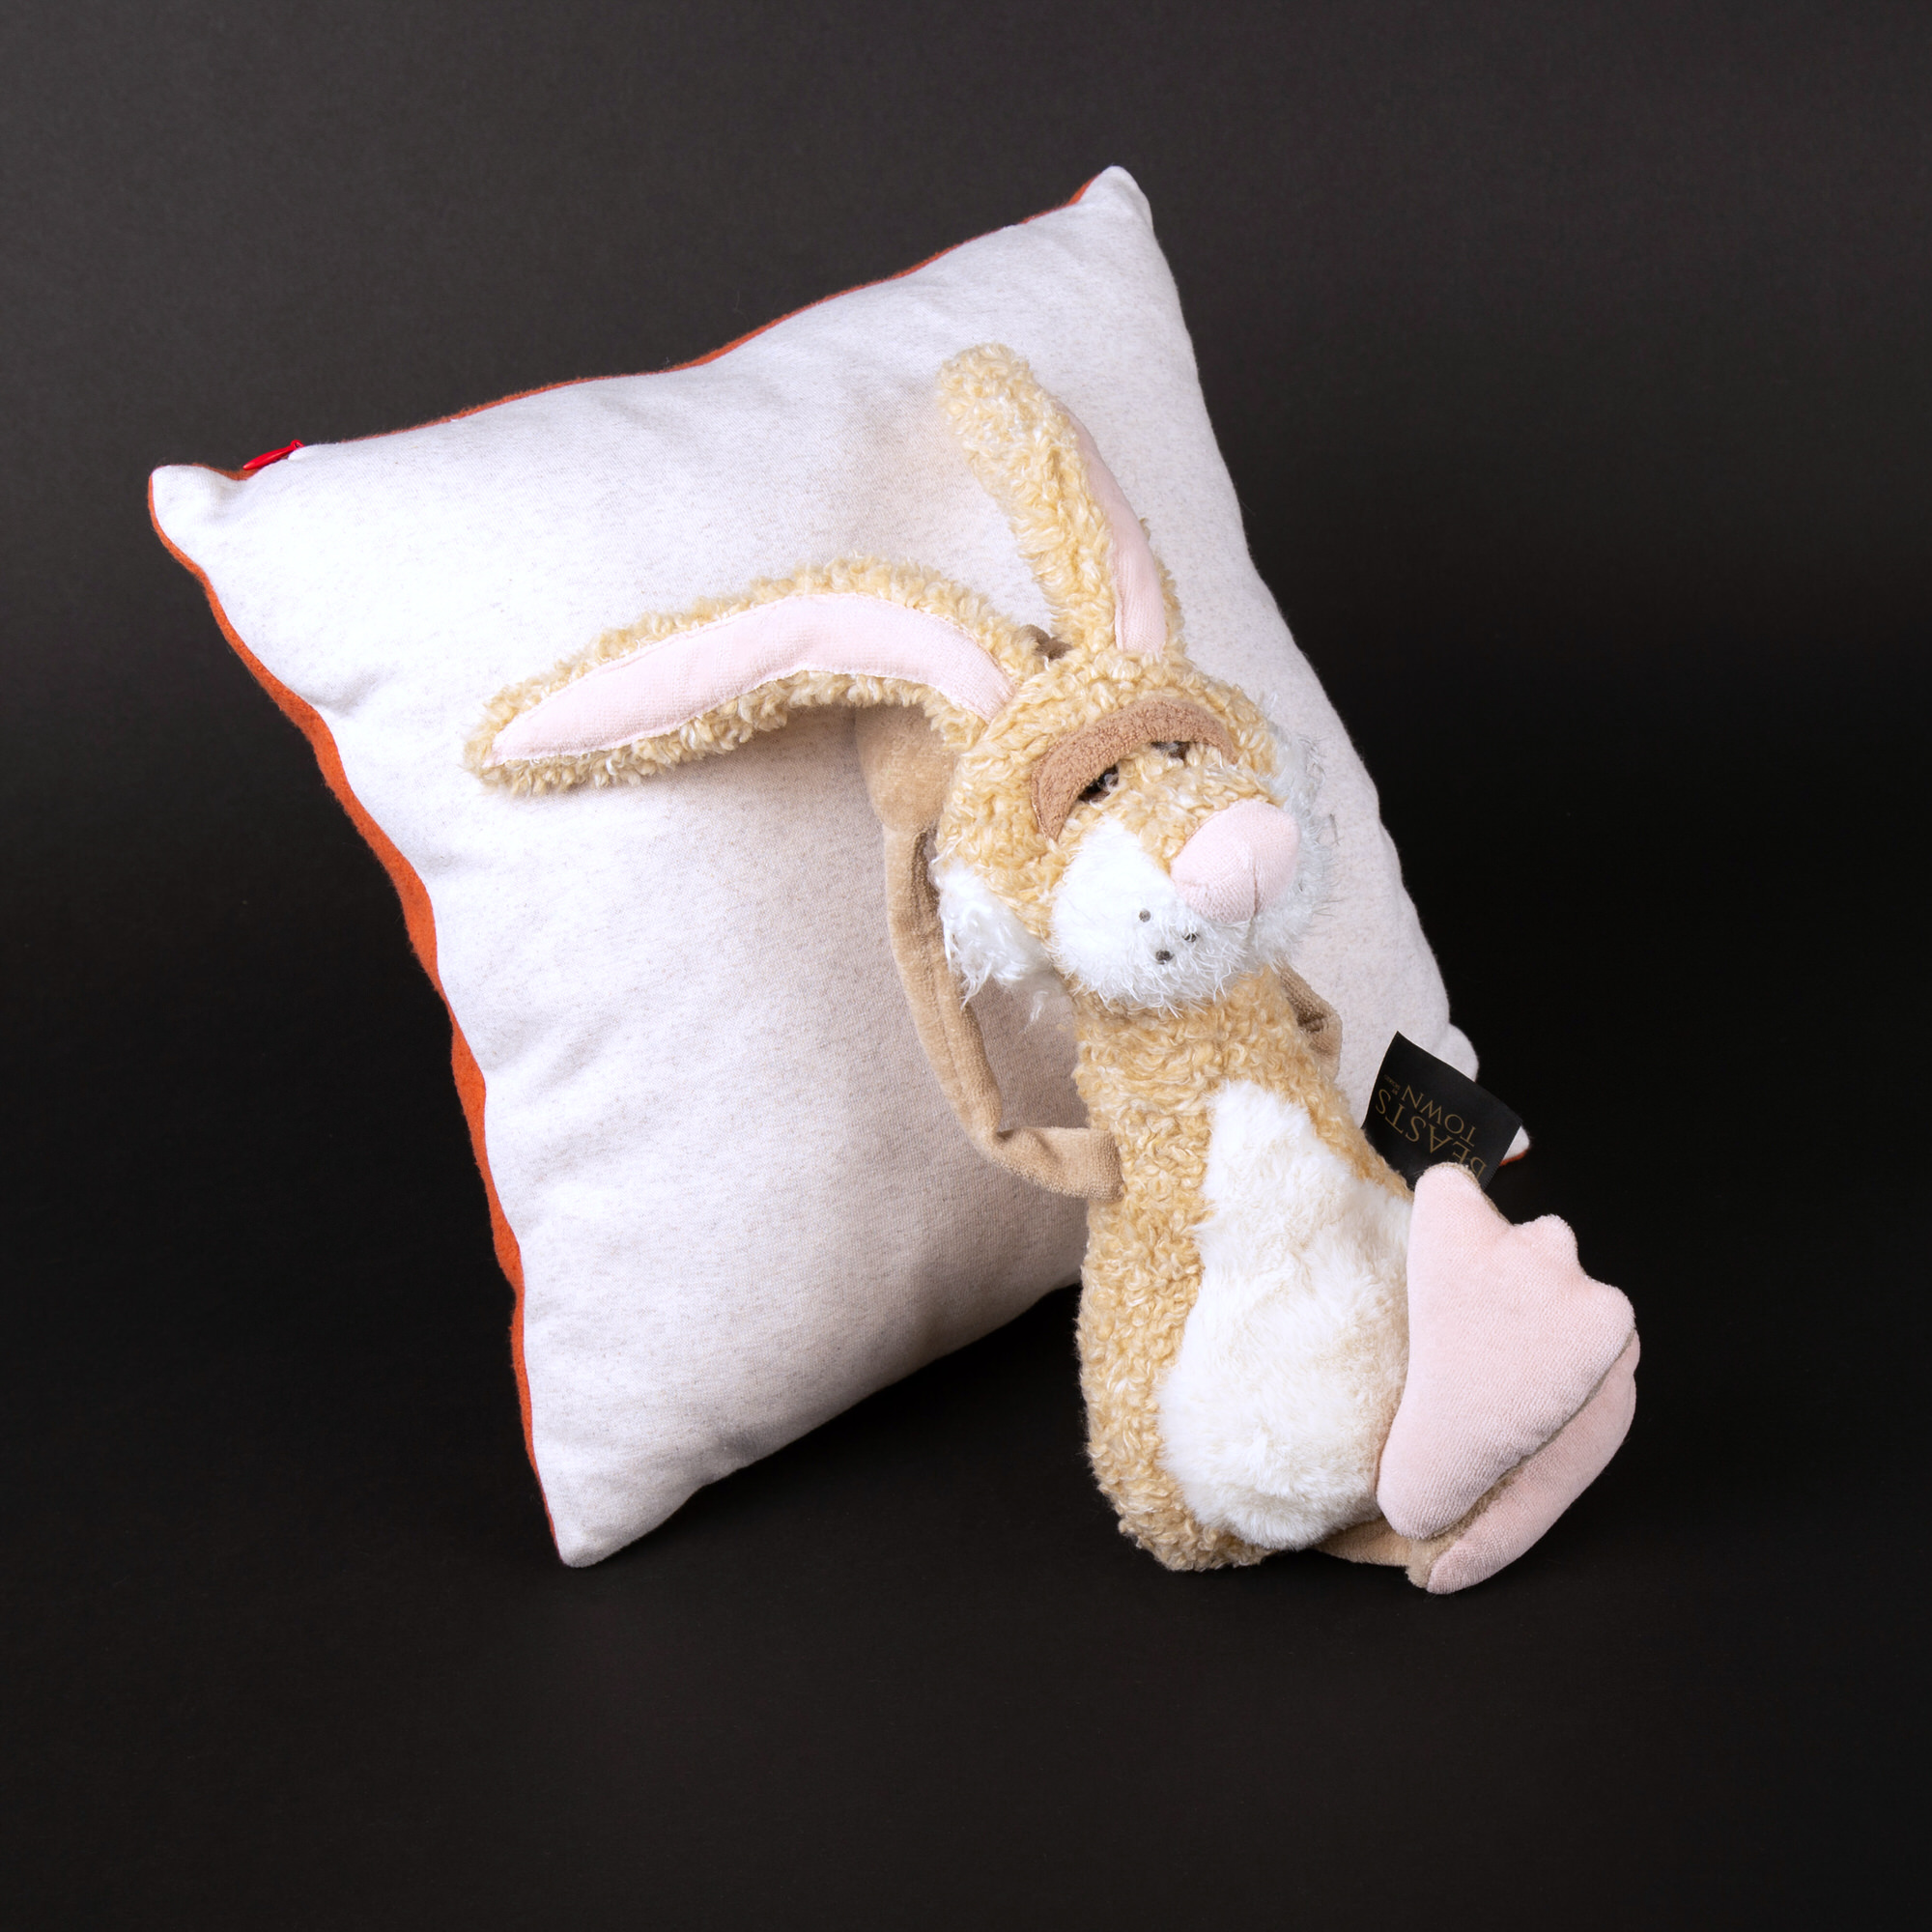 Cuddle rabbit "Lazy Bunny", Beaststown